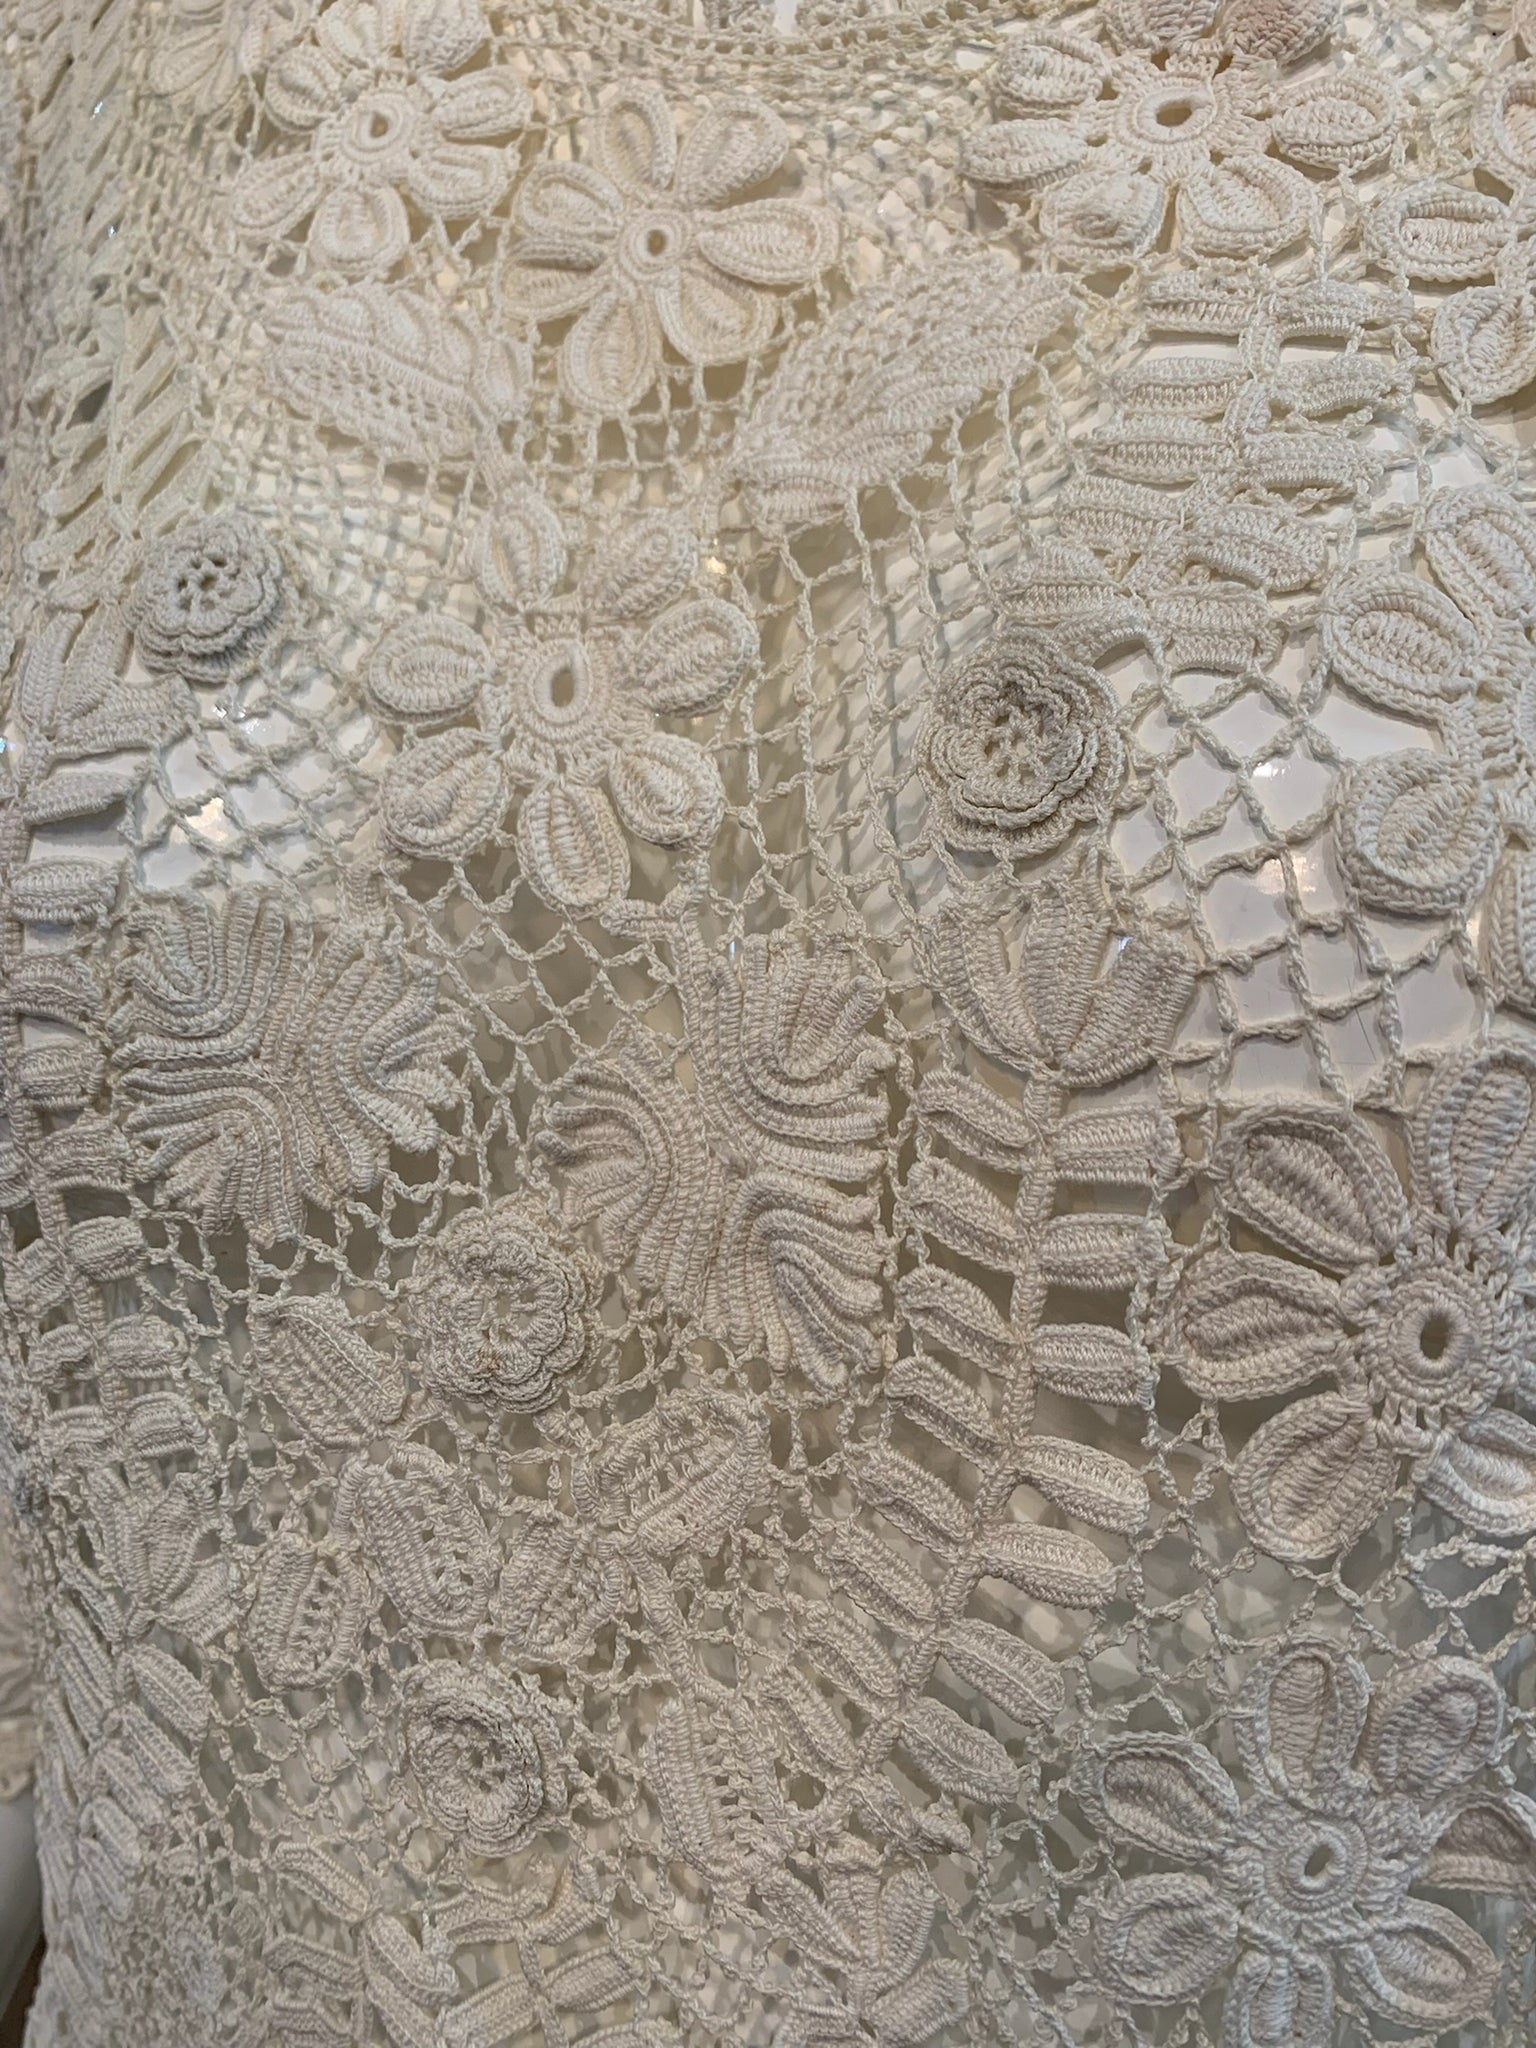  Edwardian Incredible White Irish Crochet Blouse  DETAIL 4 of 5